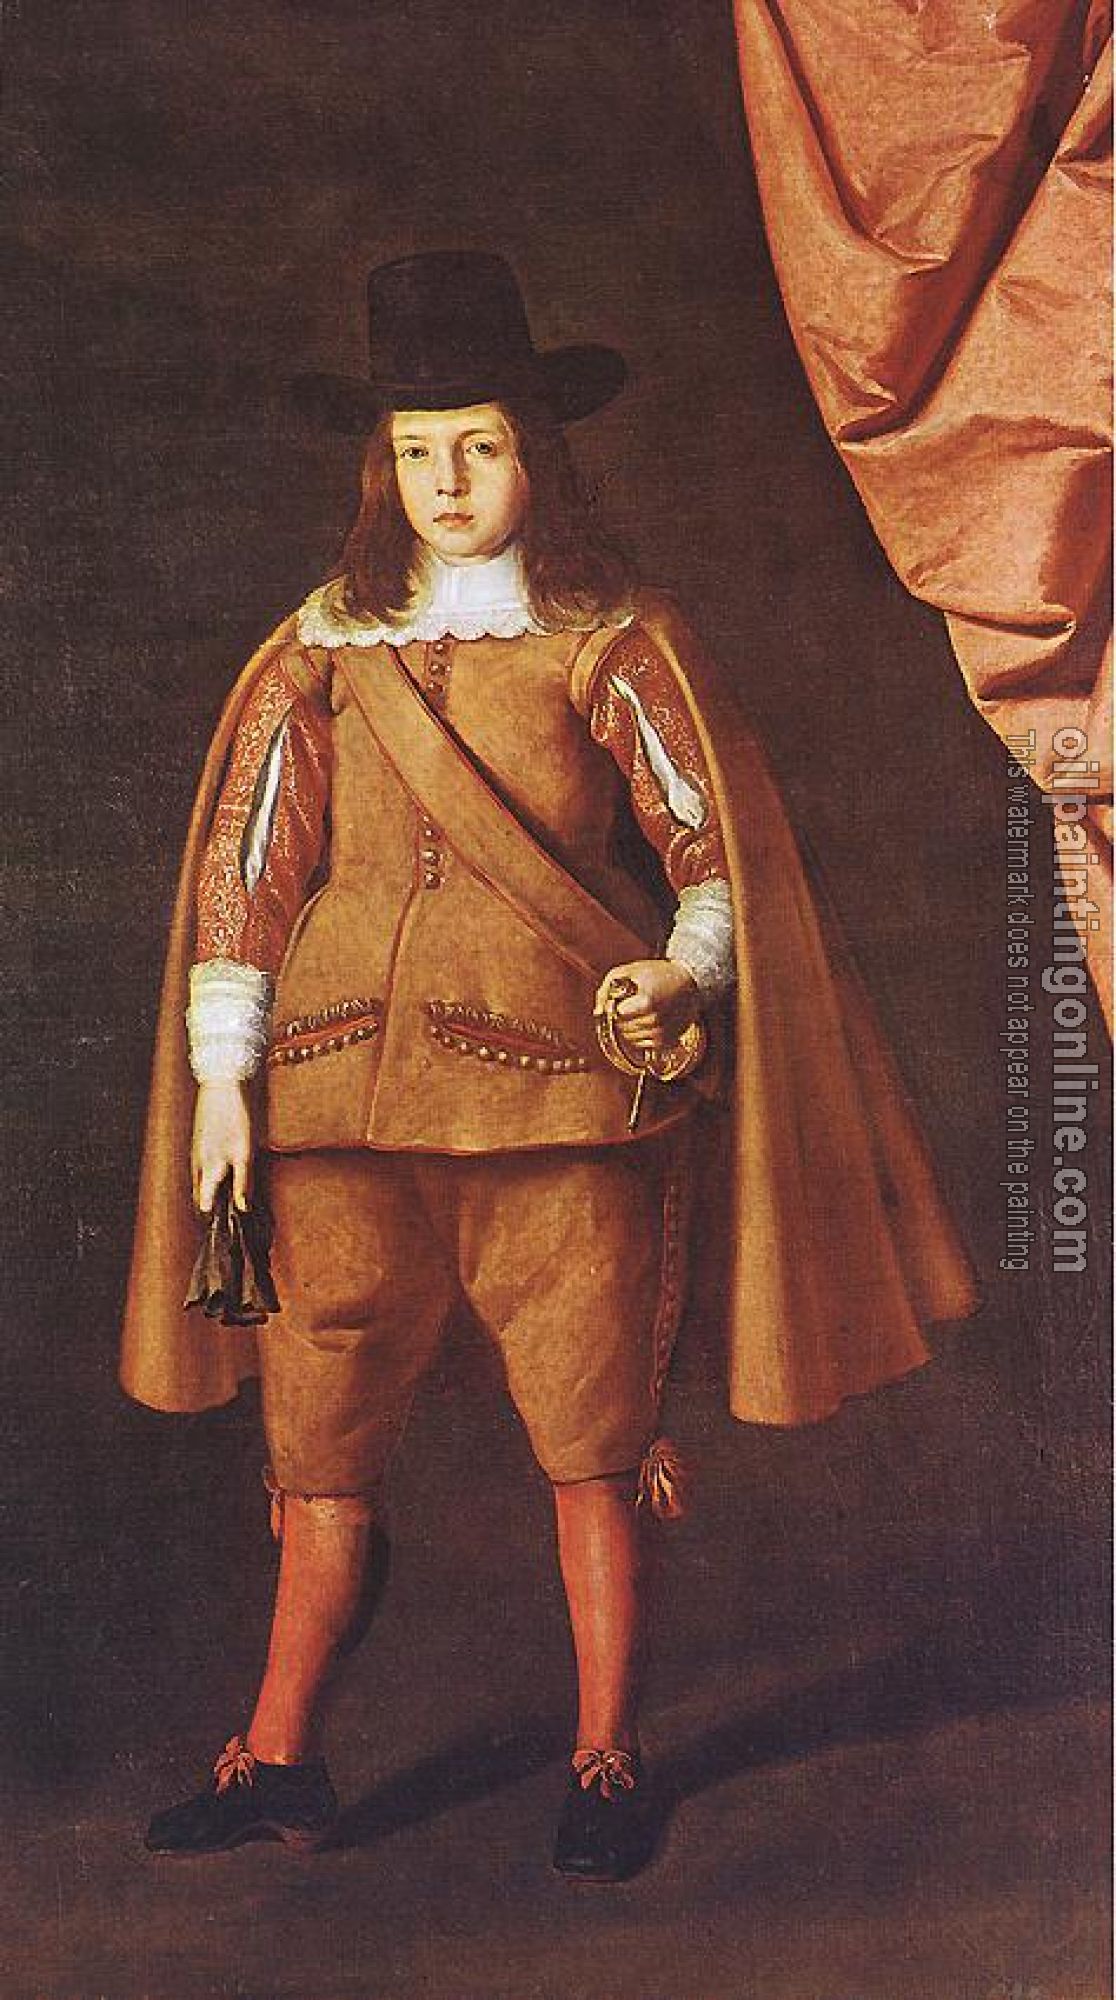 Zurbaran, Francisco de - Portrait of the Duke of Medinaceli